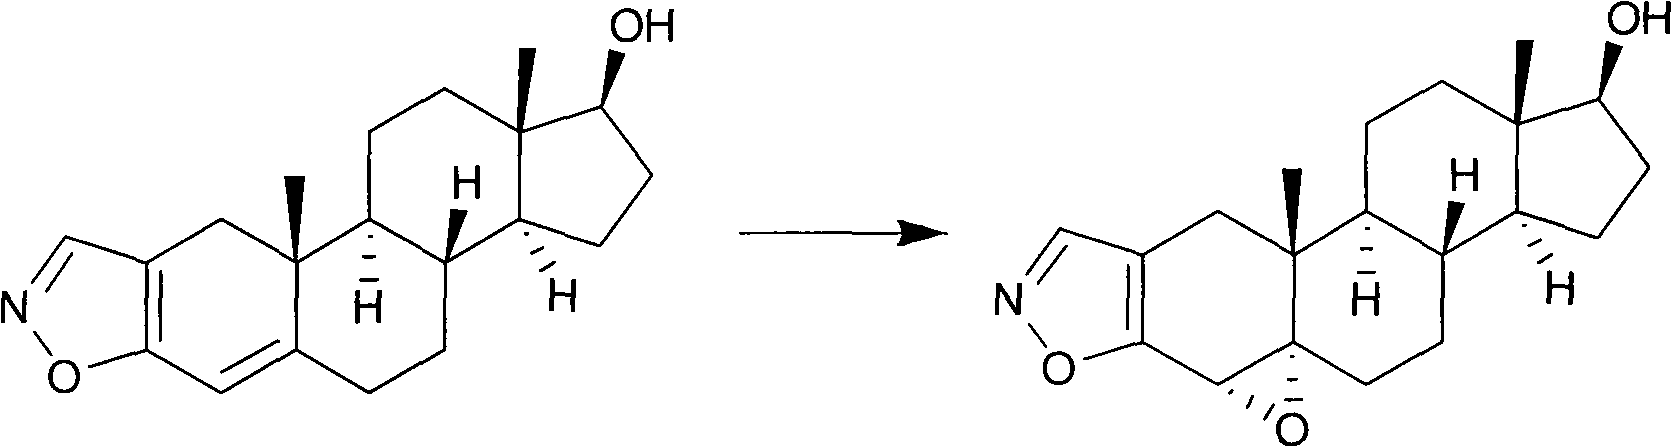 Preparation method of moguisteine intermediate 17 beta-hydroxyl-4 alpha, 5 alpha-epoxy androstane (2,3-d) isoxazole